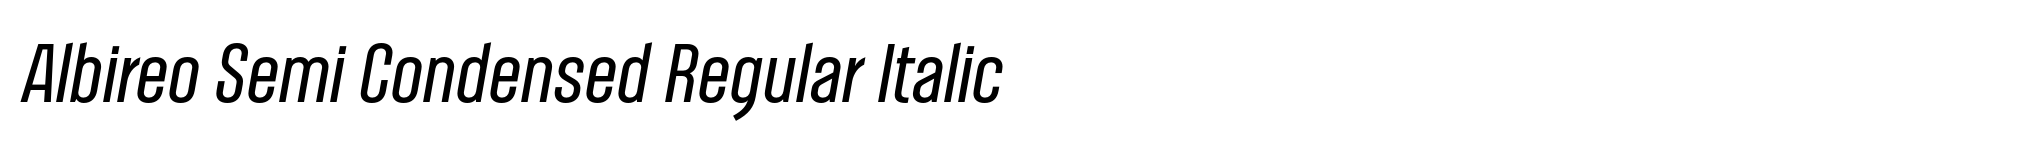 Albireo Semi Condensed Regular Italic image